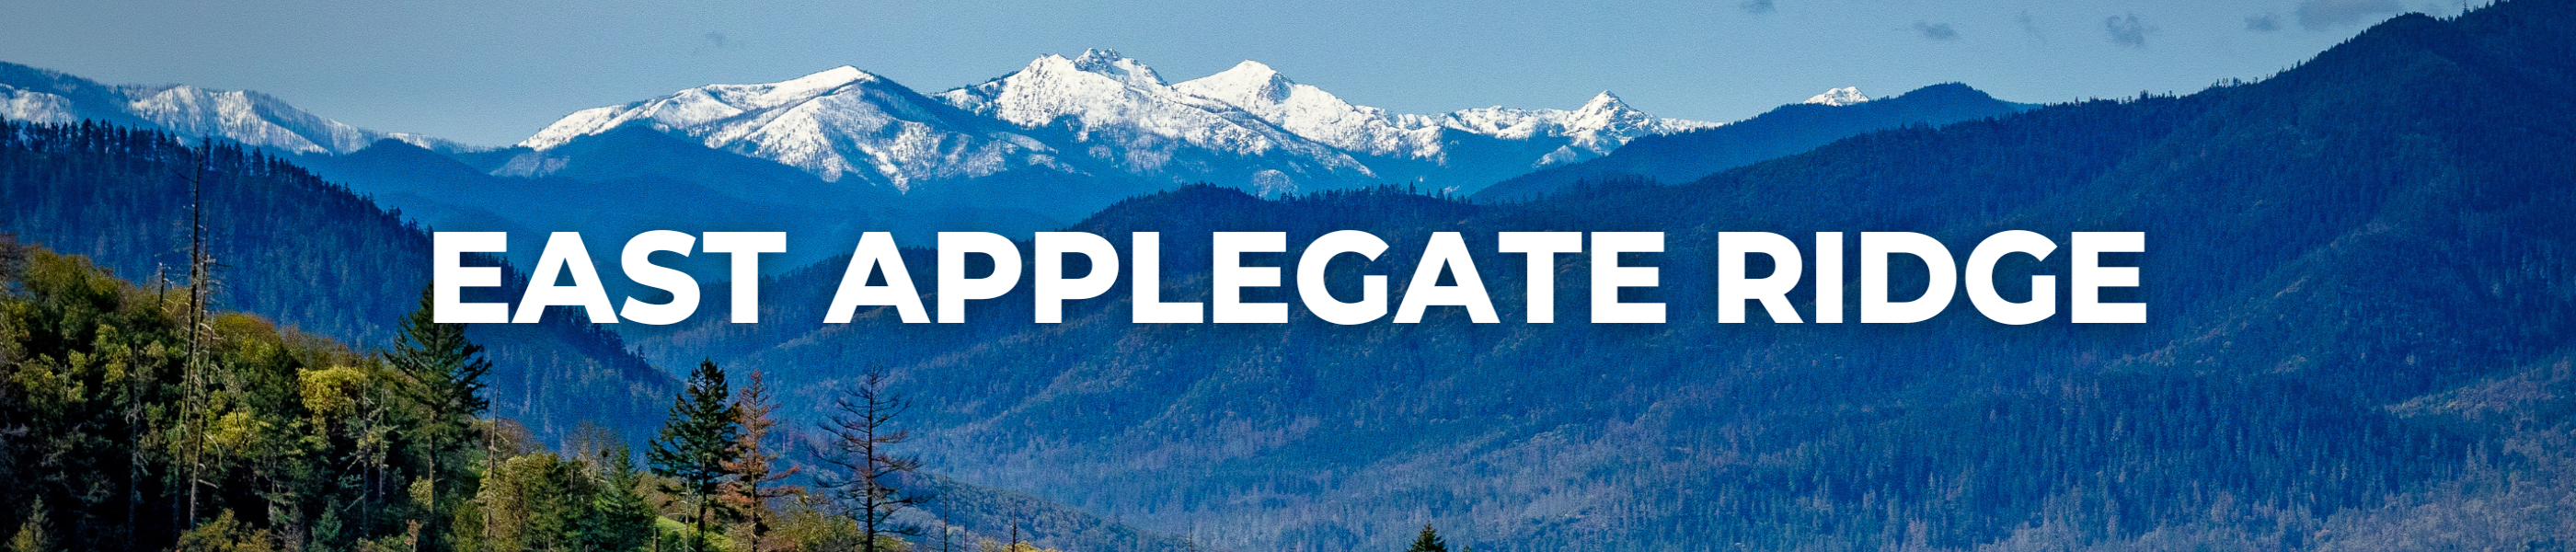 East Applegate Ridge Trail Blog Header